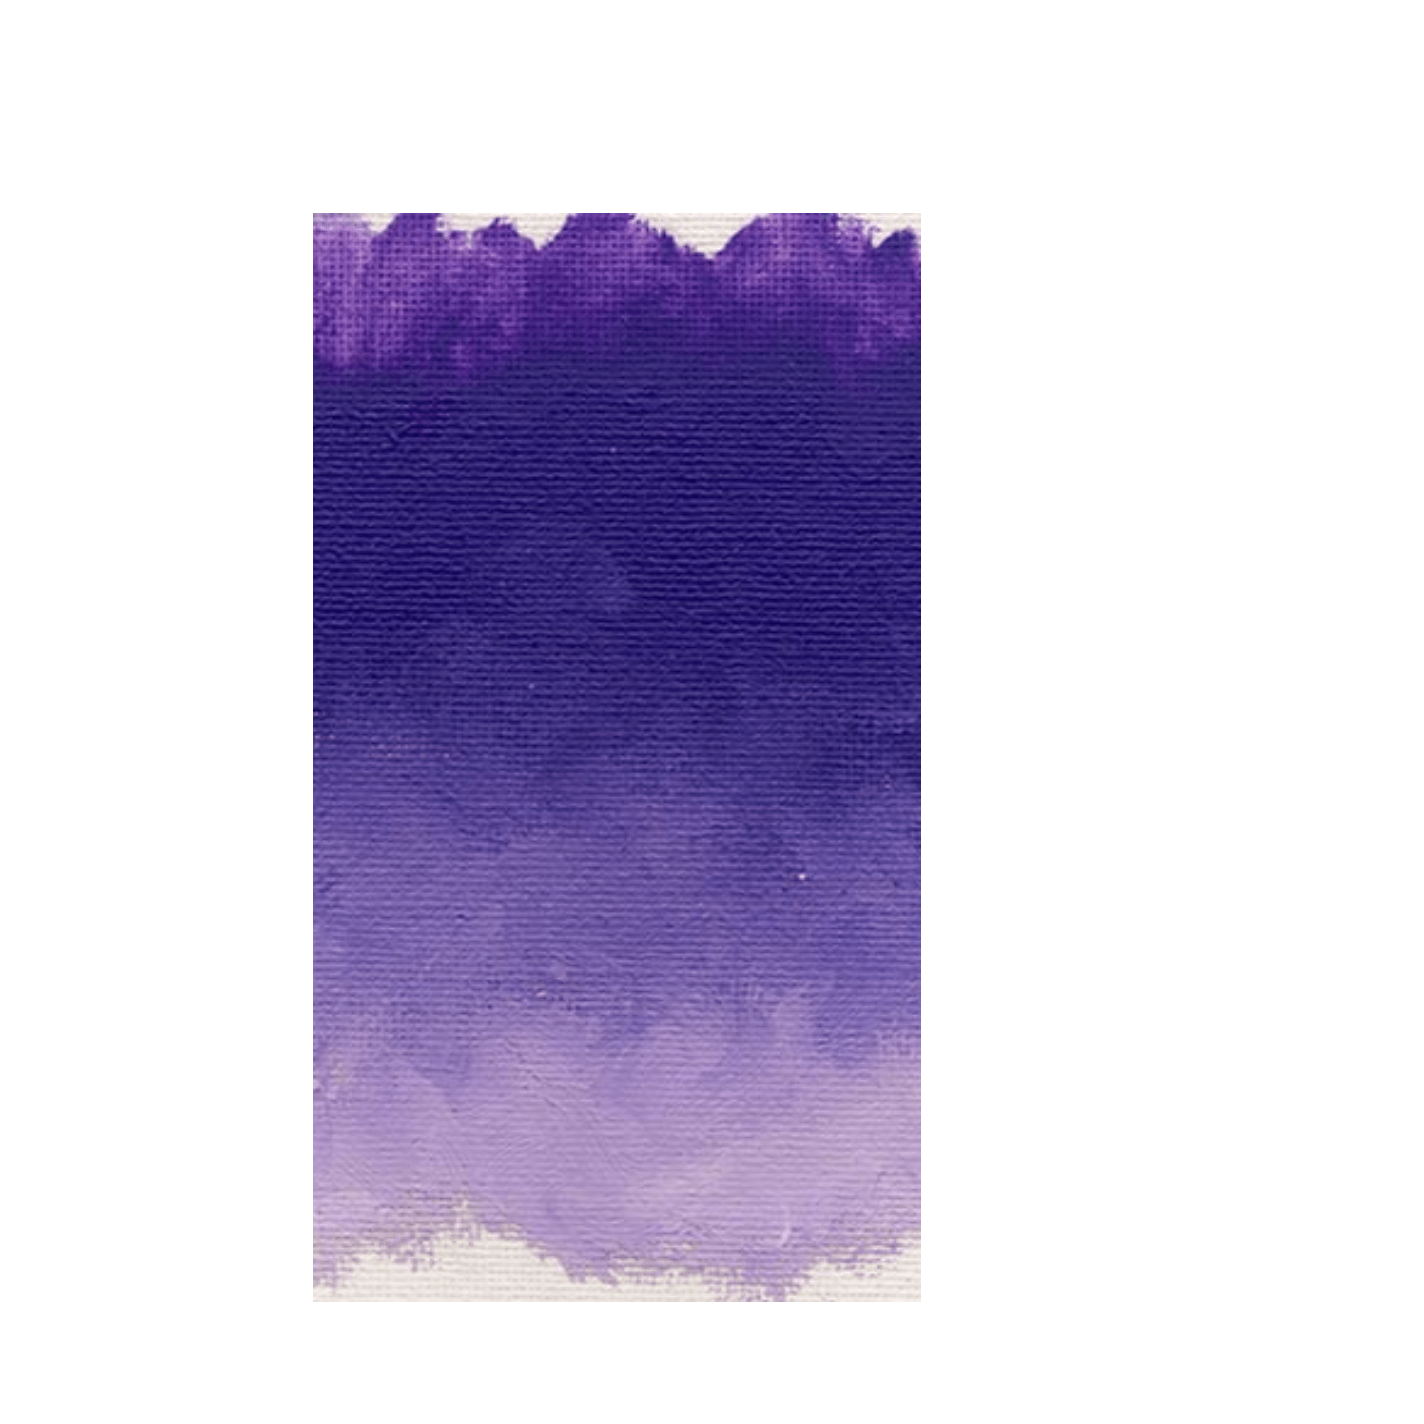 Williamsburg Oliemaling Provence Violet Bluish